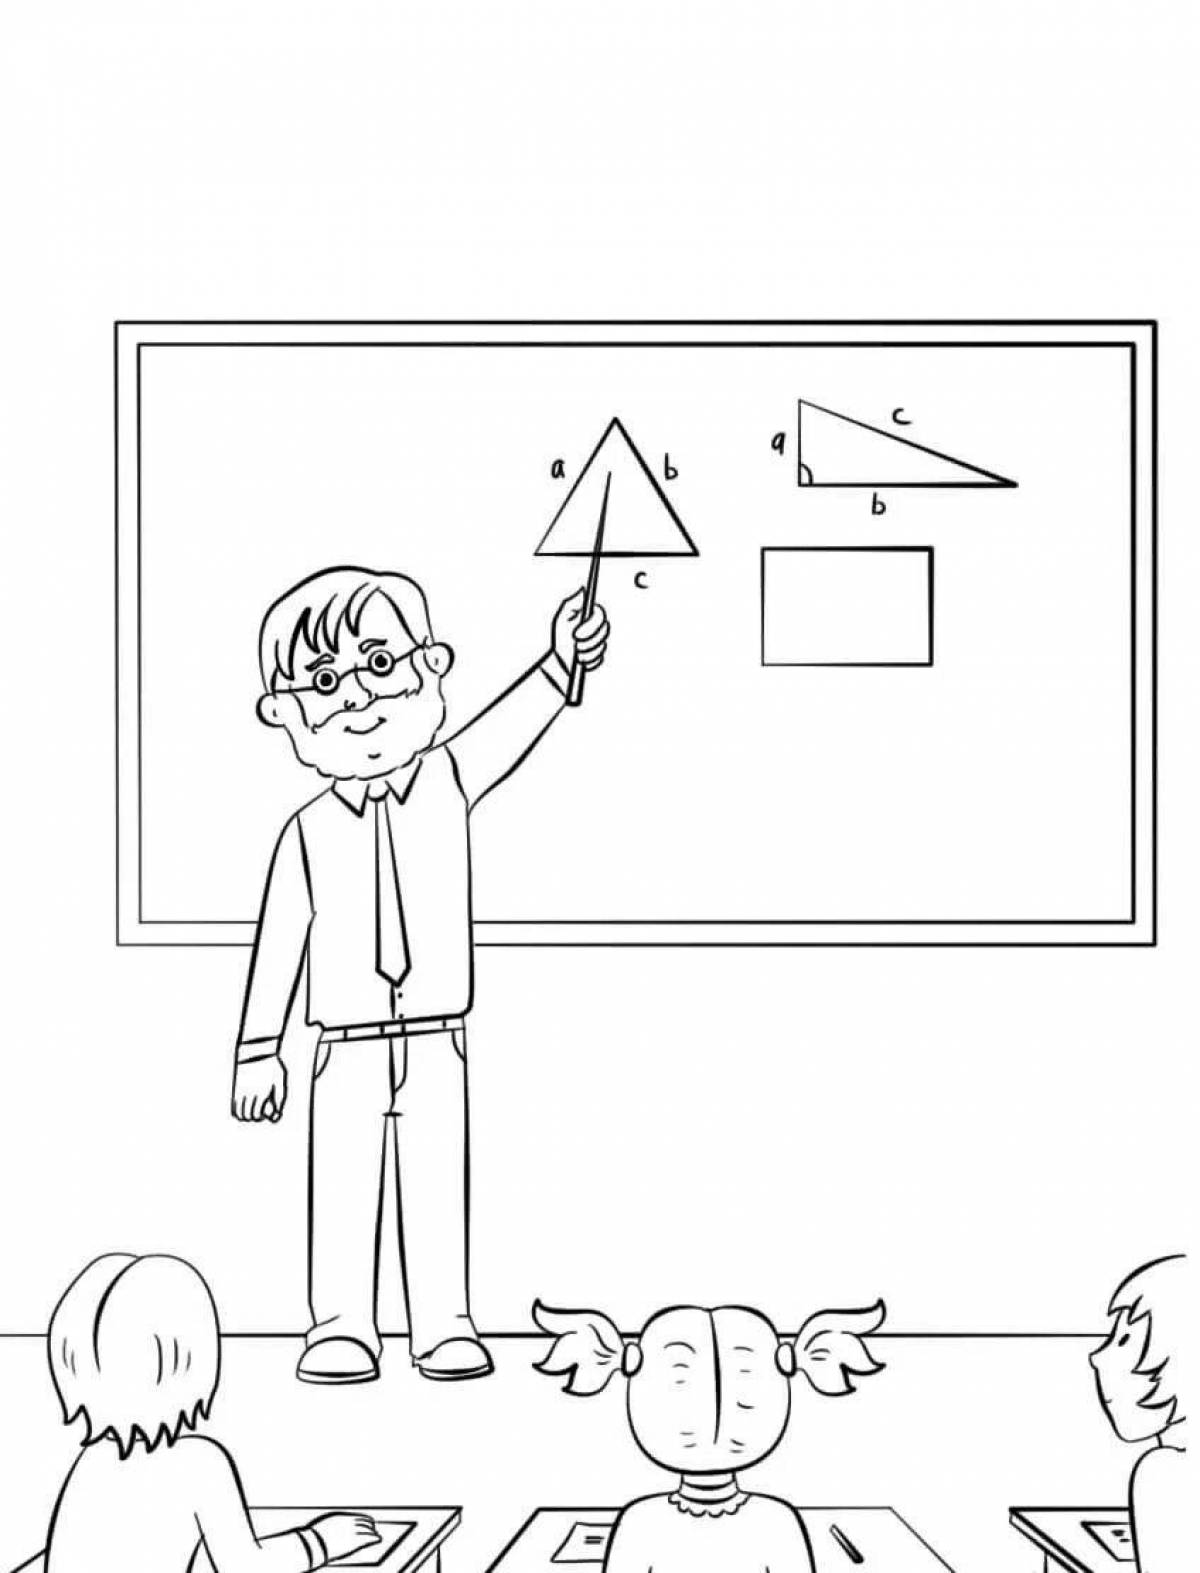 Joyful teacher at the blackboard with a pointer